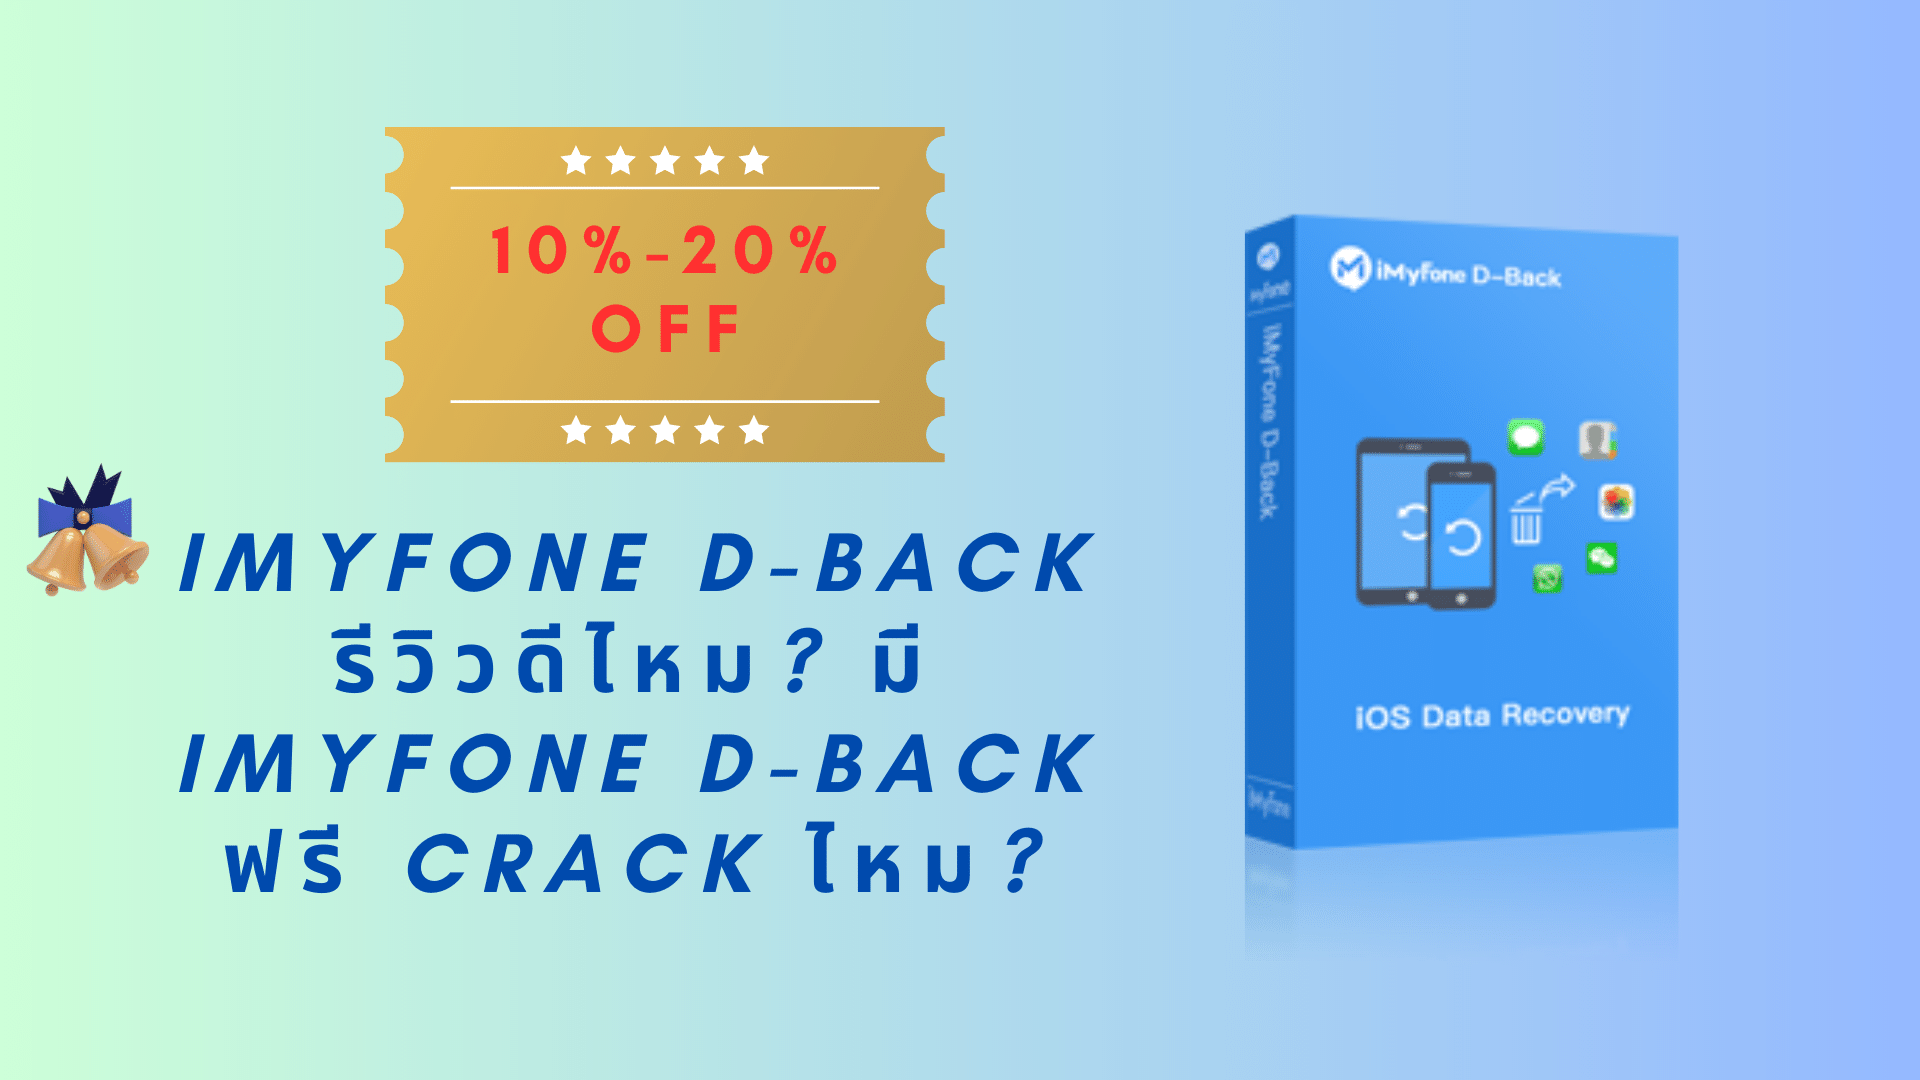 iMyFone D-Back รีวิวดีไหม? มี iMyFone D-Back ฟรี Crack ไหม?